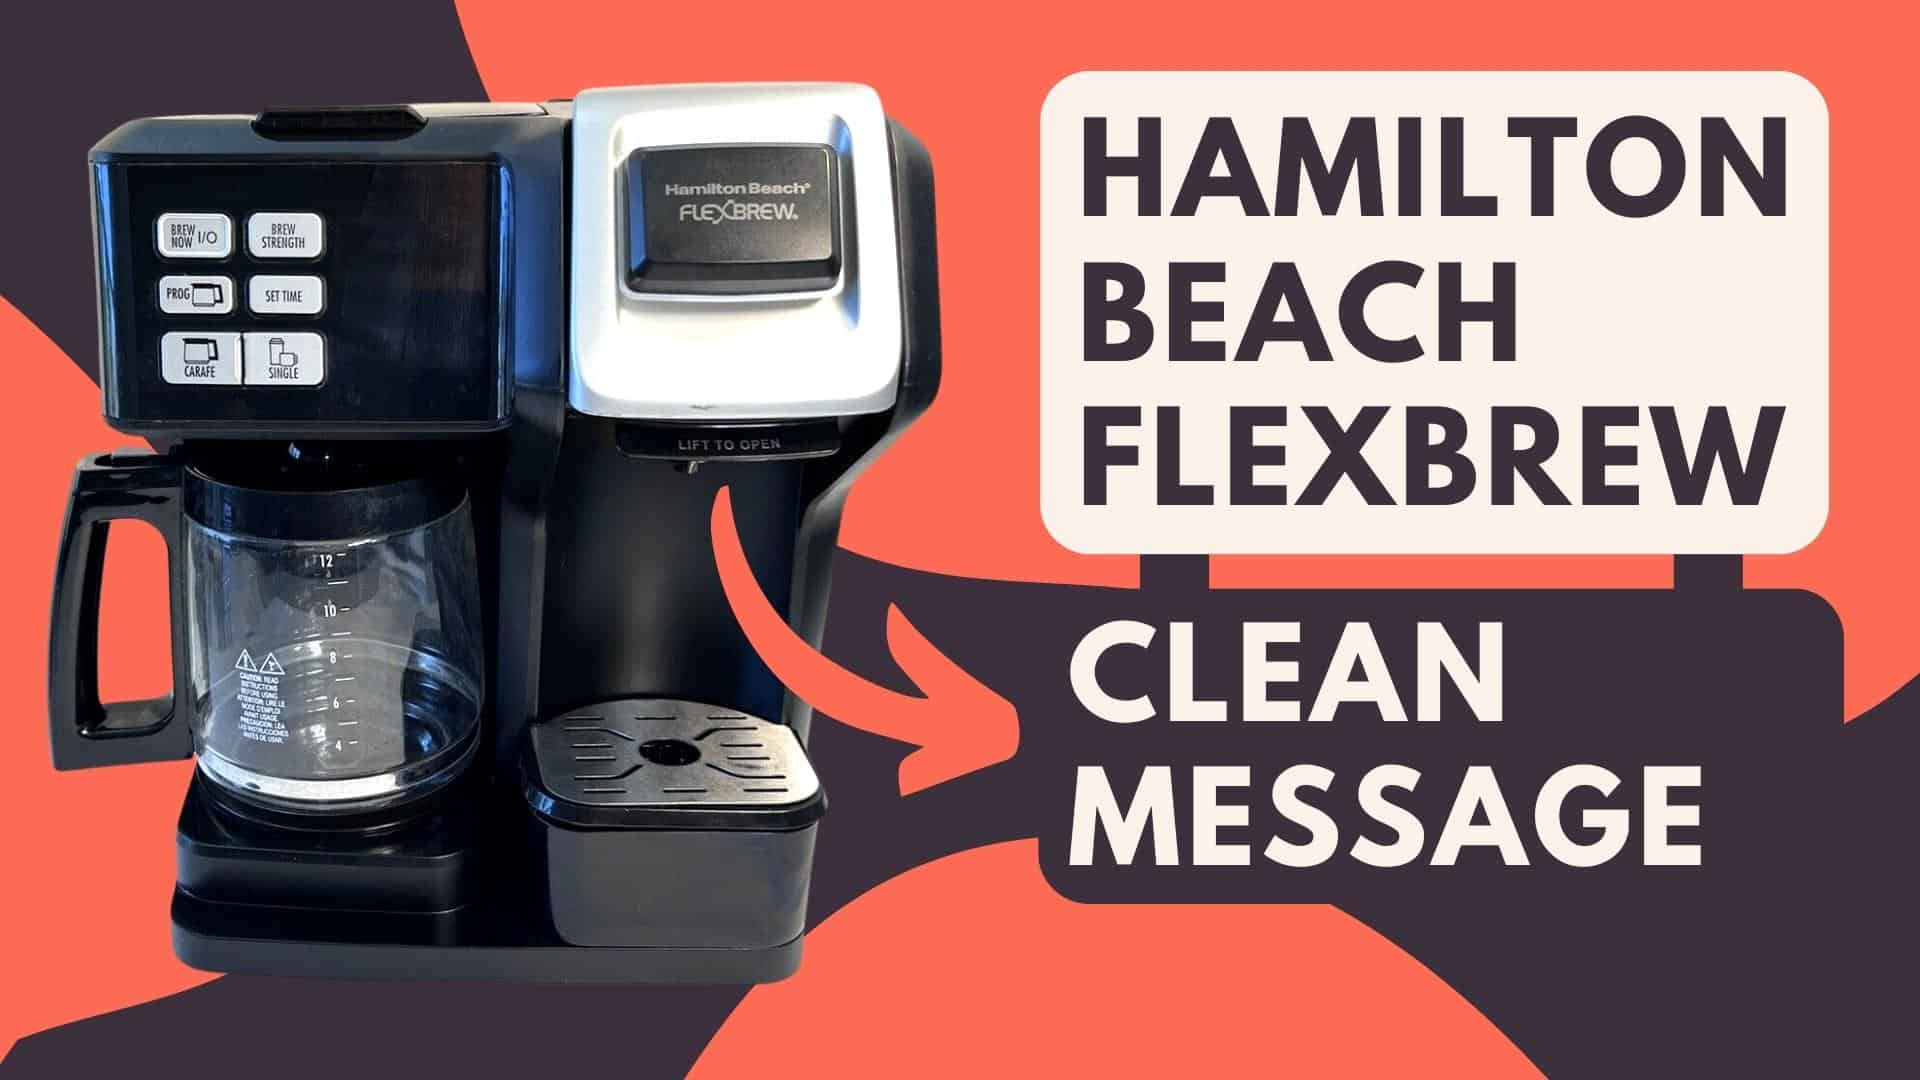 Hamilton Beach Flexbrew says clean